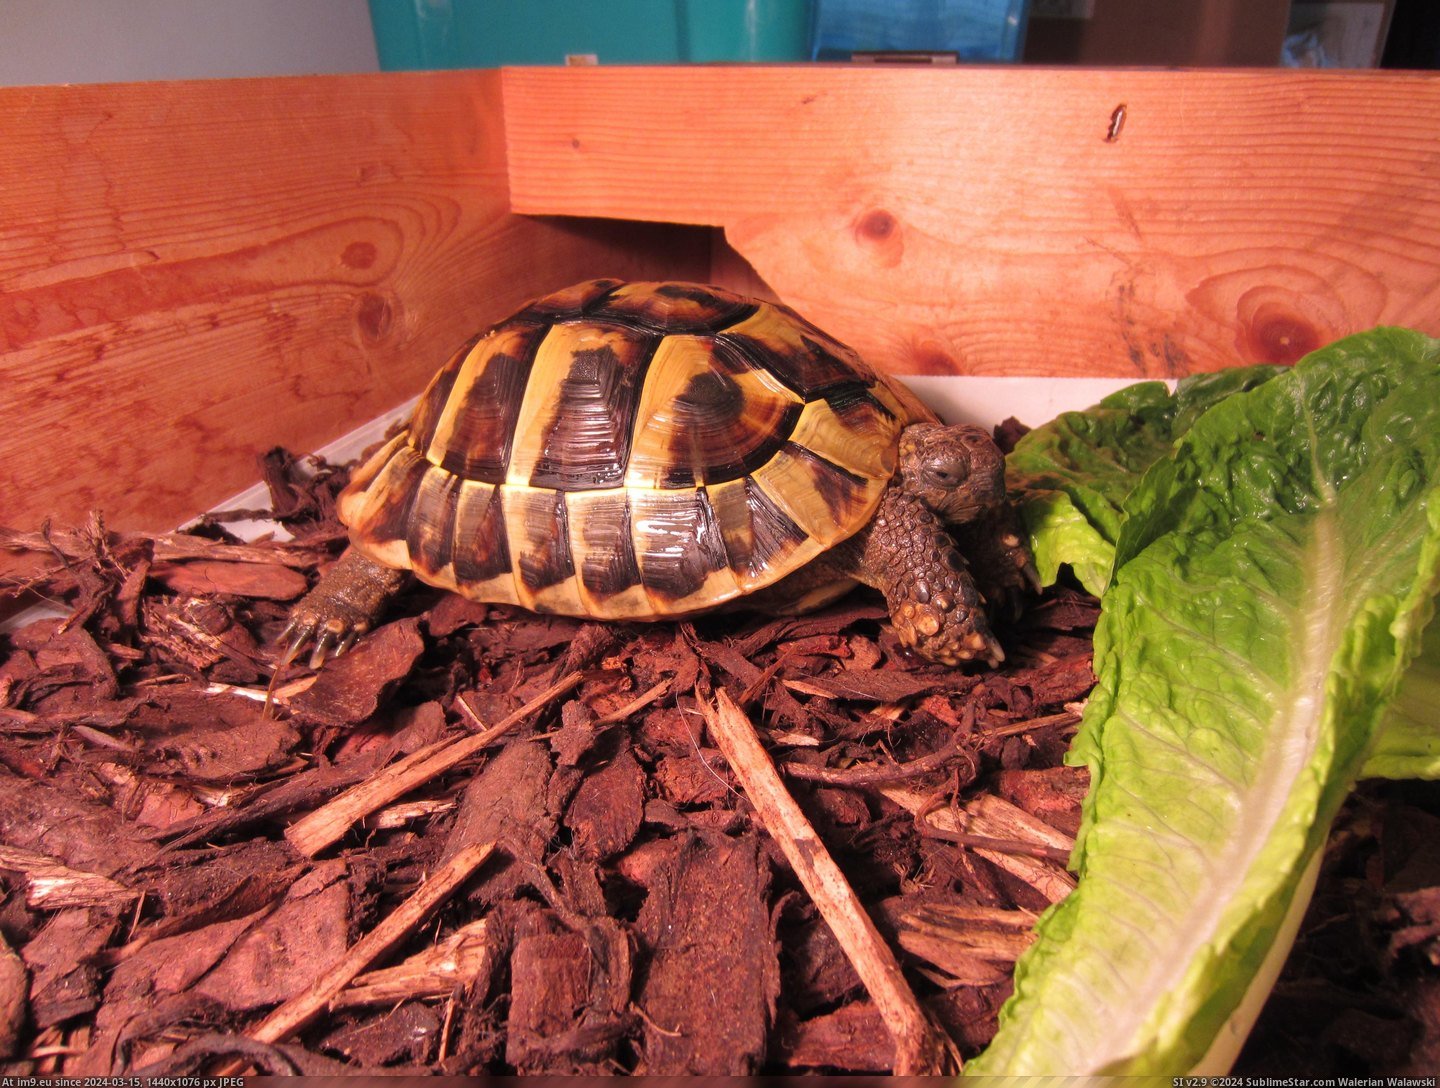 #May #Woke #Tortoise #Hibernating #Charlie #Fridge [Pics] You may remember Charlie the tortoise hibernating in the fridge? Well, today he woke up.. 8 Pic. (Bild von album My r/PICS favs))